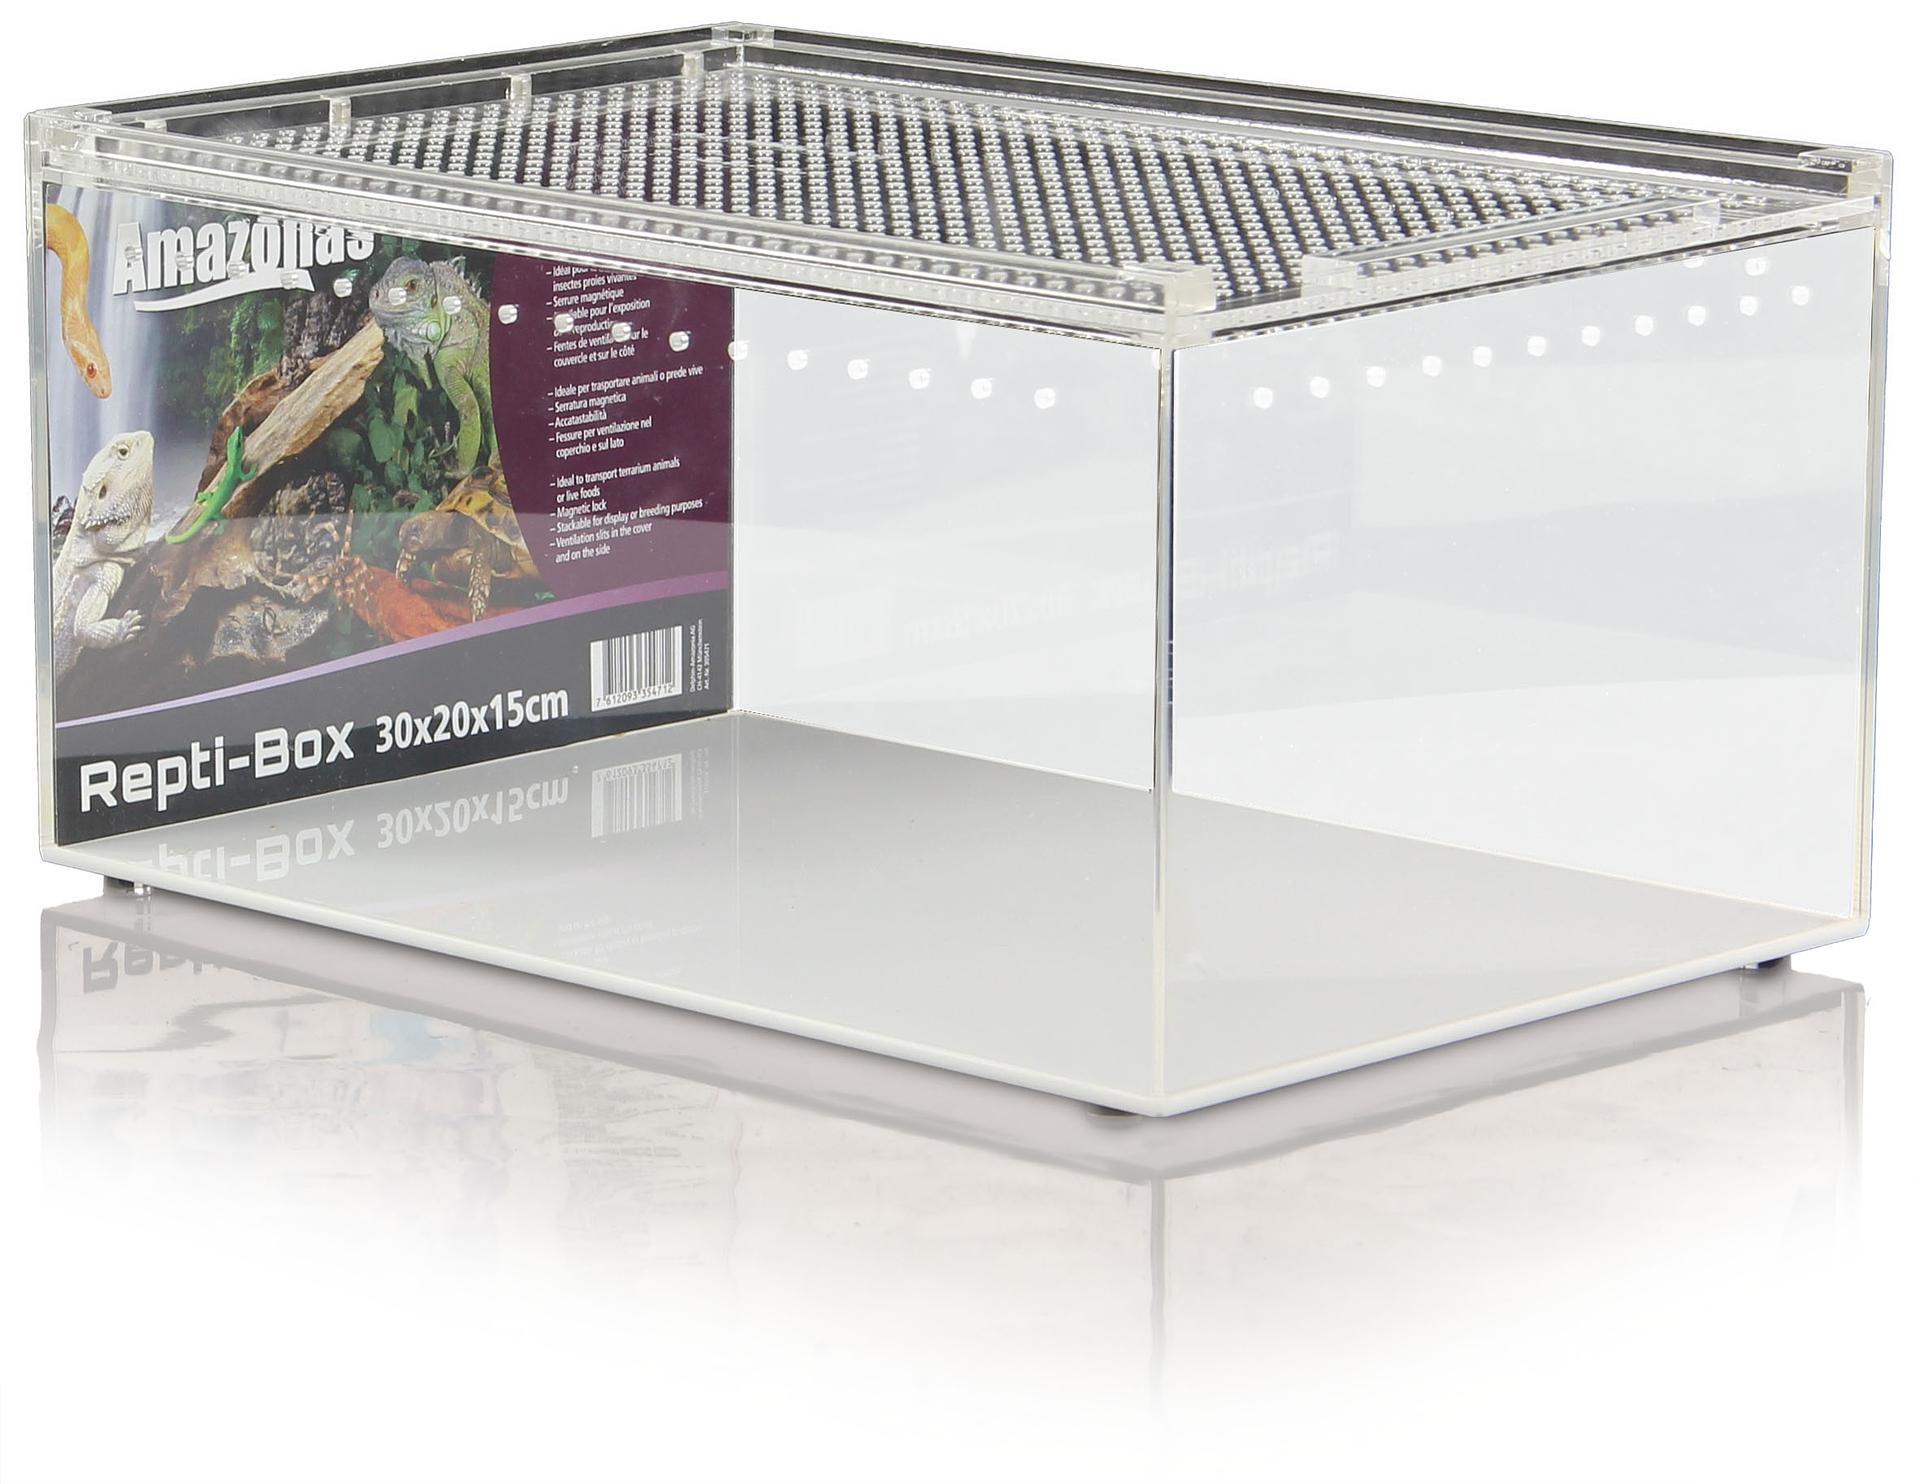 Amazonas Repti-Box, Transportbox